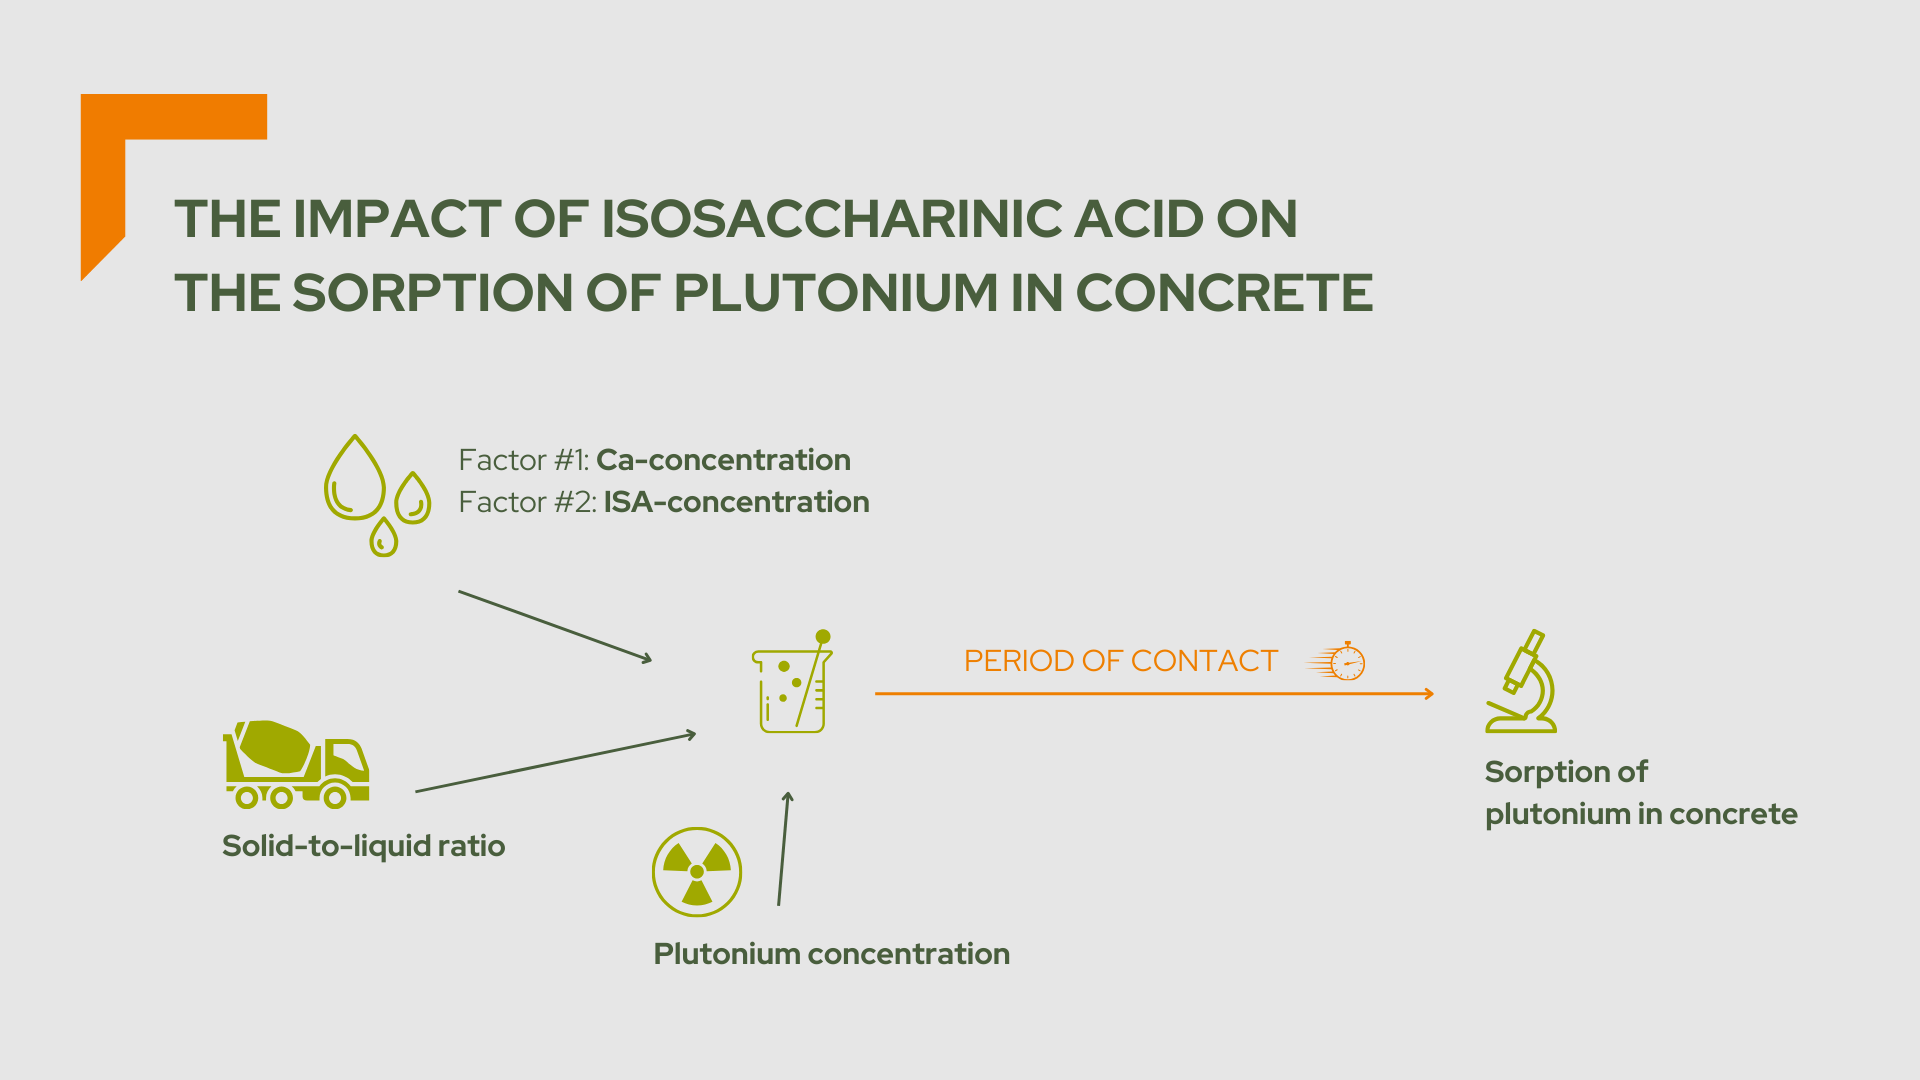 The impact of isosaccharinic acid on the sorption of plutonium in concrete